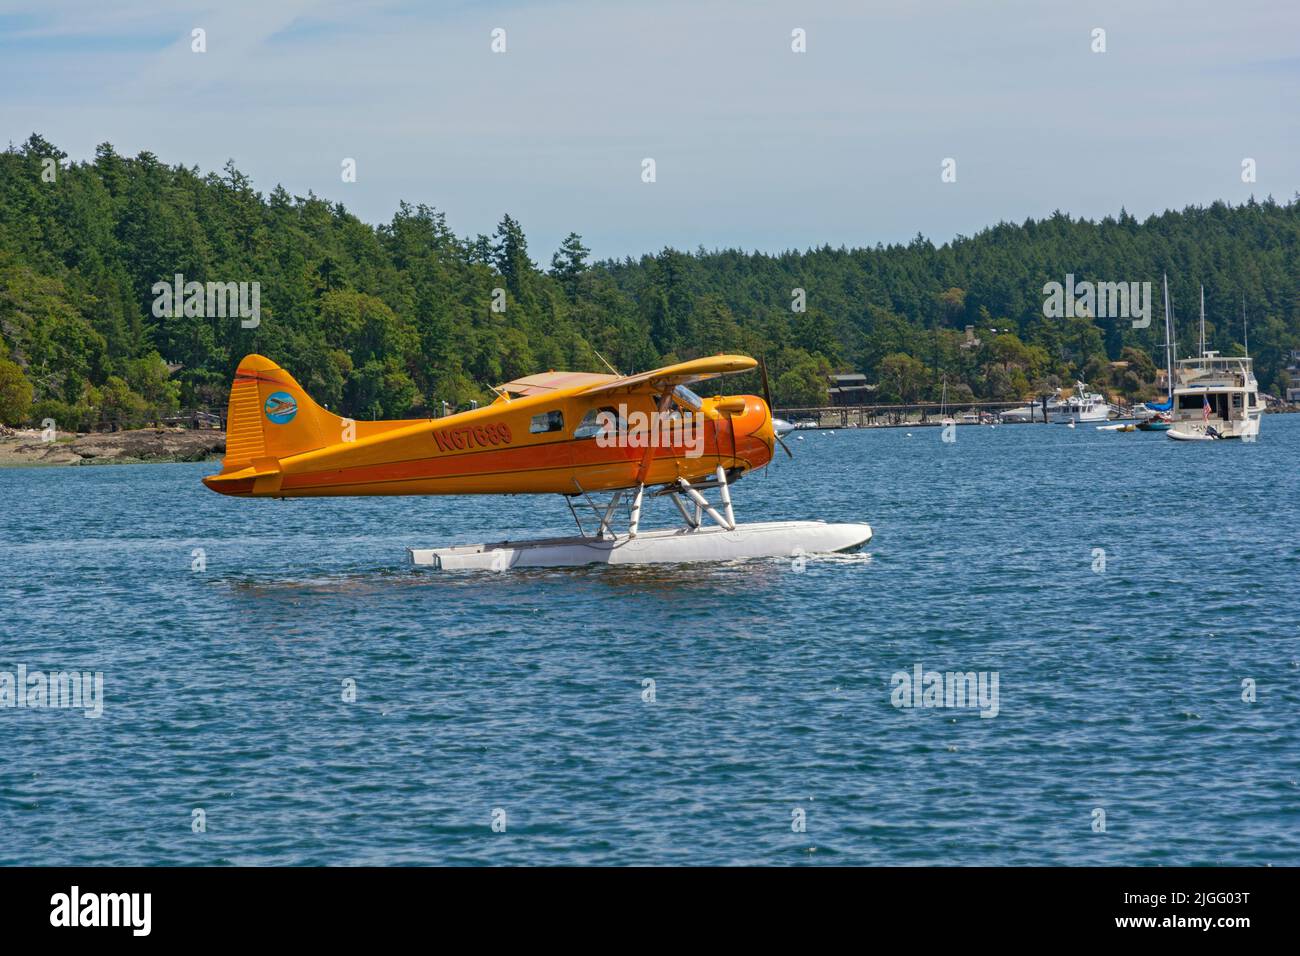 Washington, San Juan Island, Friday Harbor, de Havilland Canada DHC-2 Beaver, float plane Stock Photo